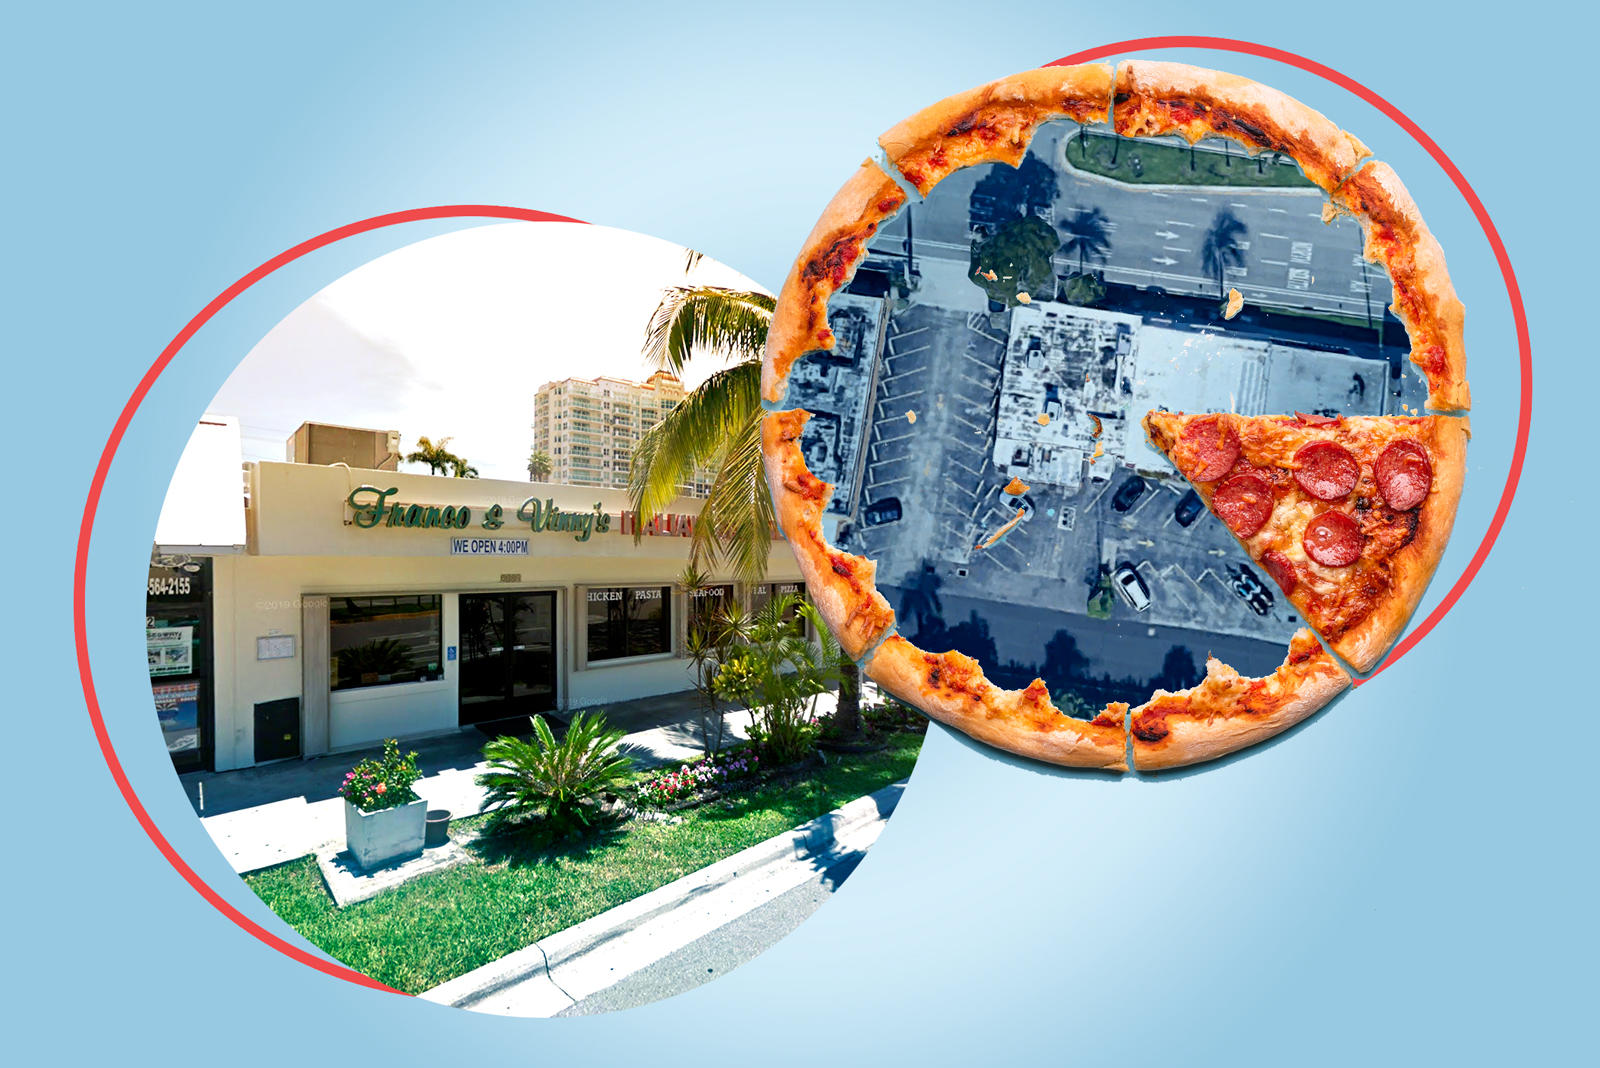 Franco & Vinny’s Pizza Shack at 2908 East Sunrise Boulevard (Google Maps, iStock)